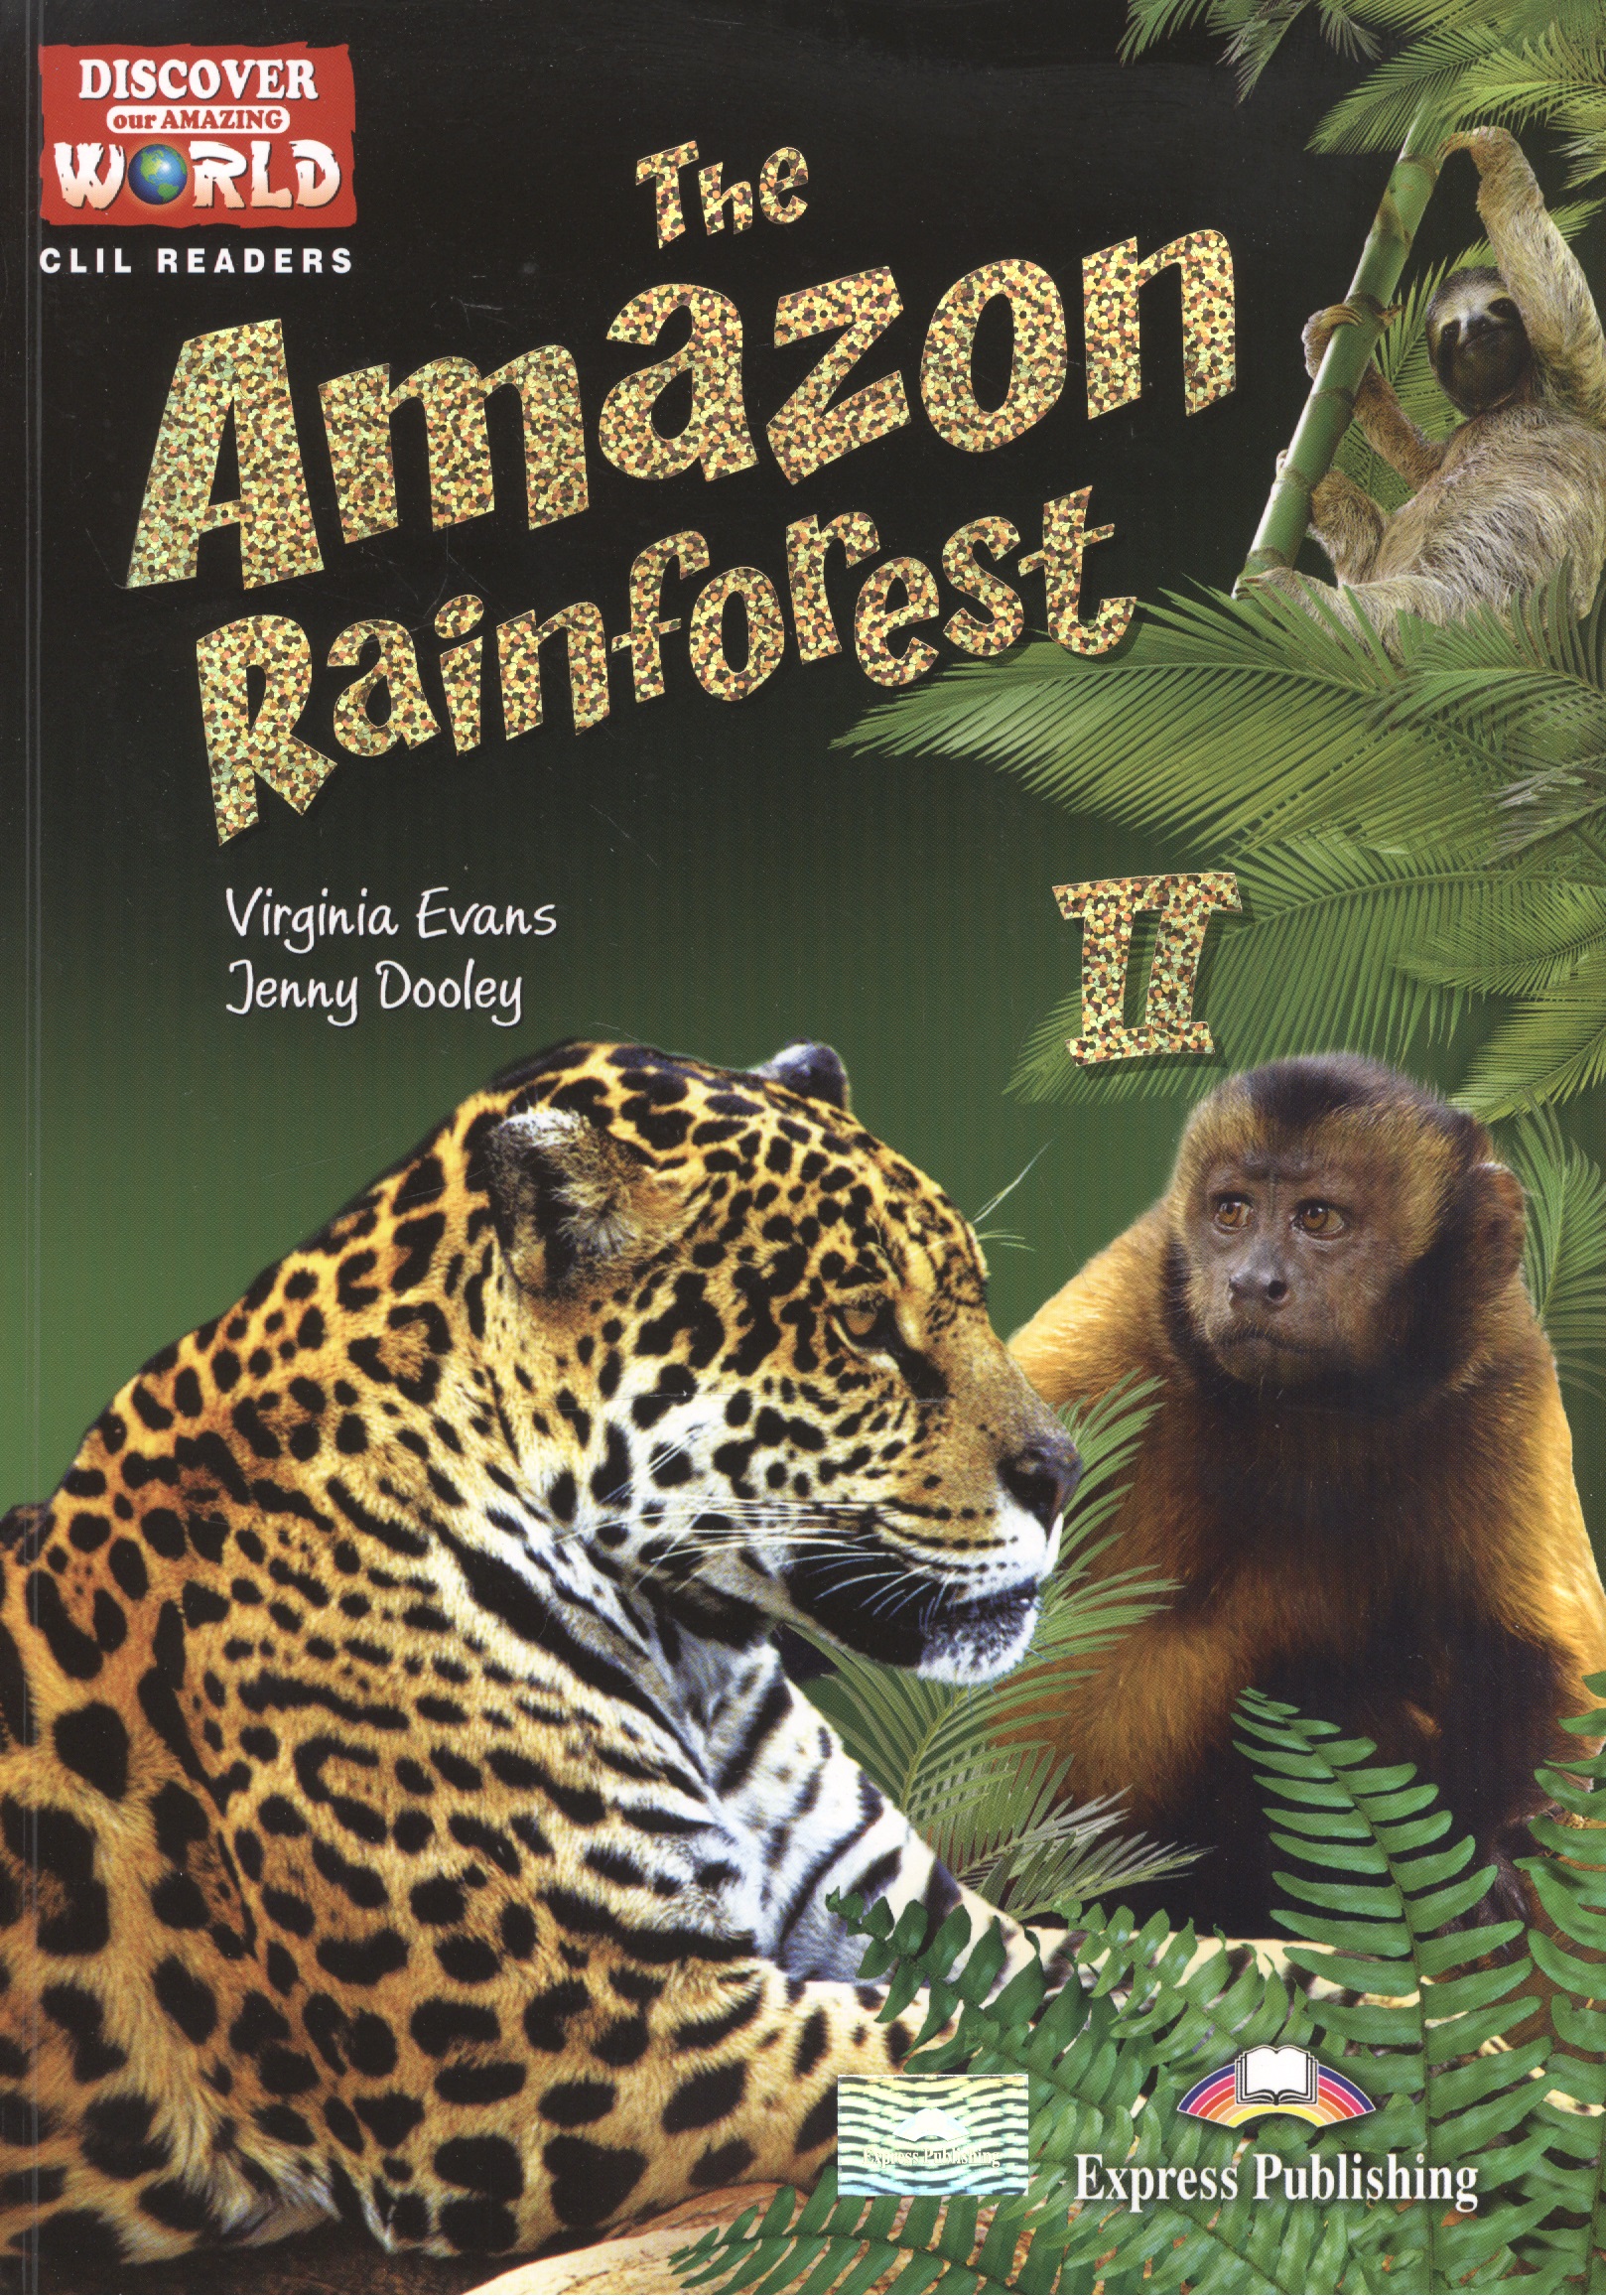 The Amazon Rainforest 2. Reader. Книга для чтения